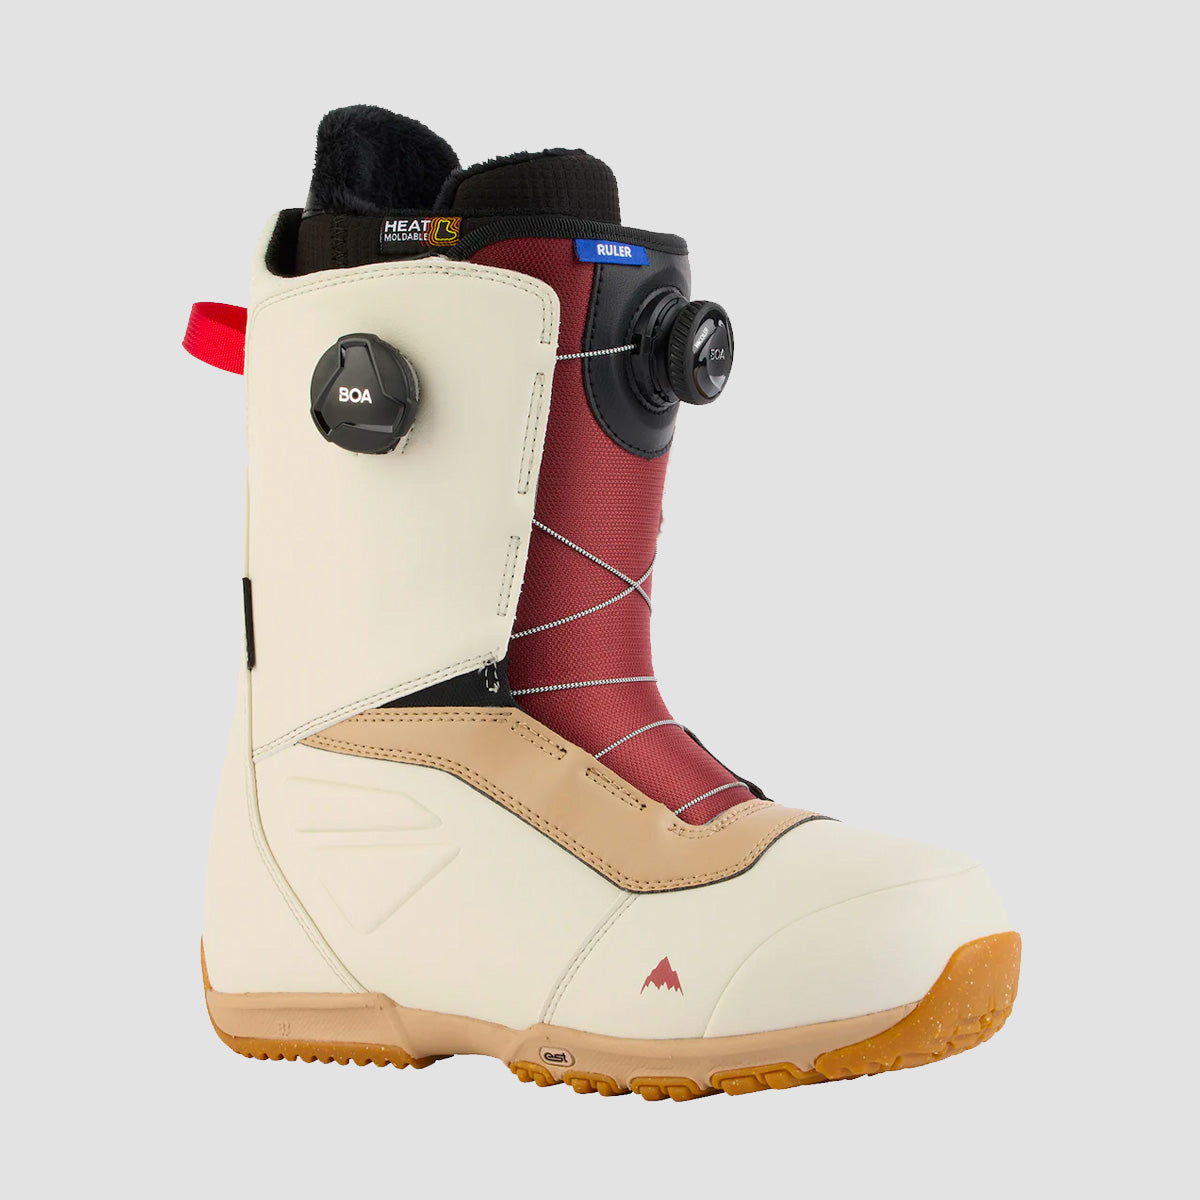 Burton Ruler BOA Snowboard Boots Stout White/Red